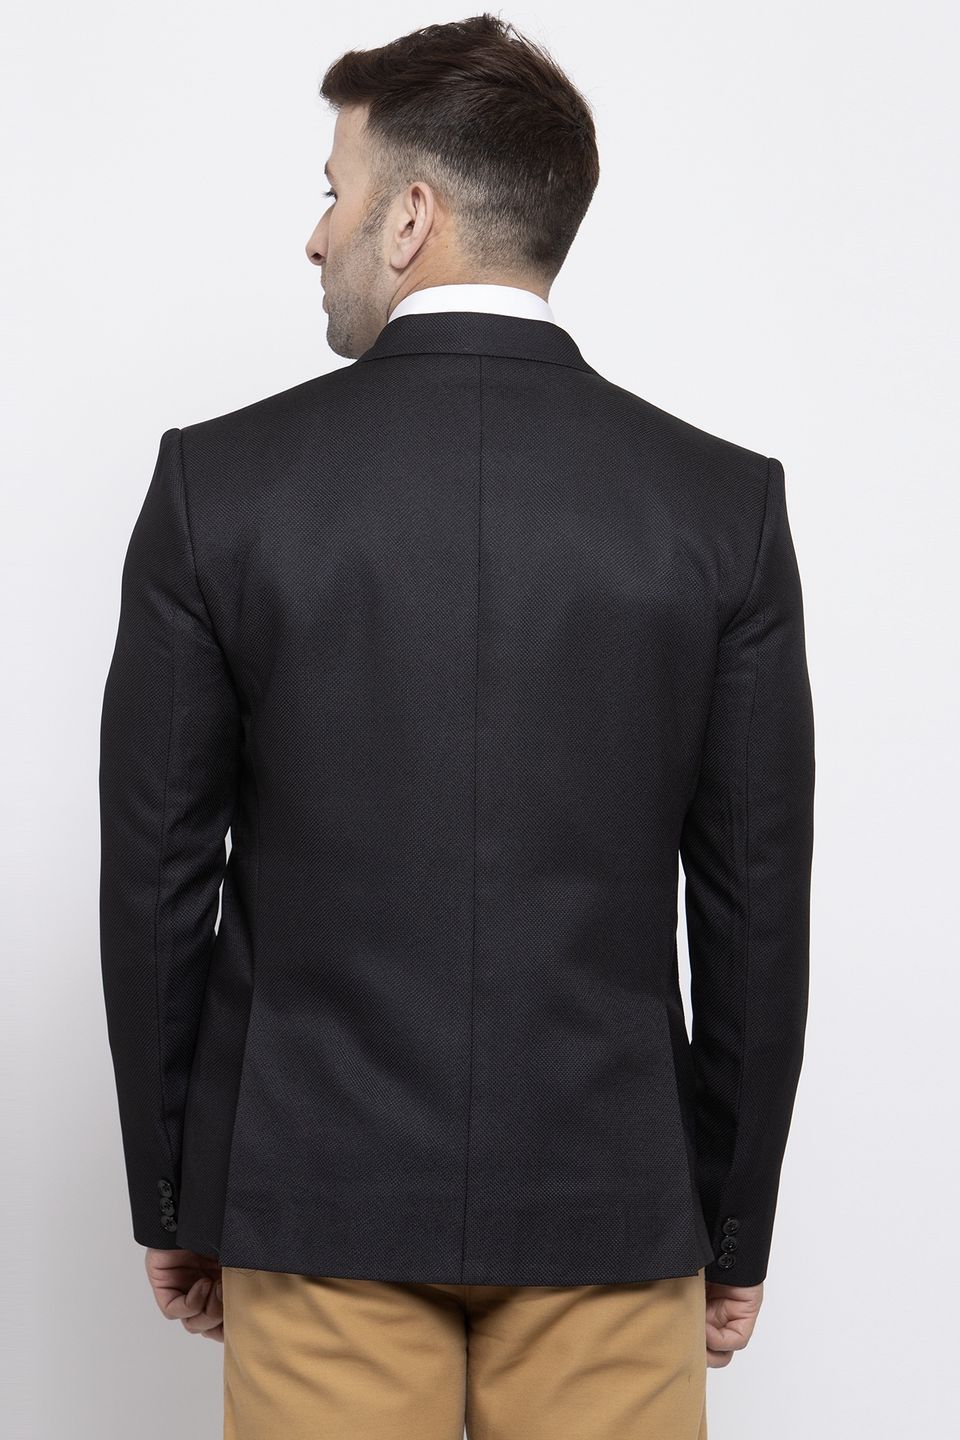 WINTAGE Men's Polyester Cotton Festive and Casual Blazer Coat Jacket : Black